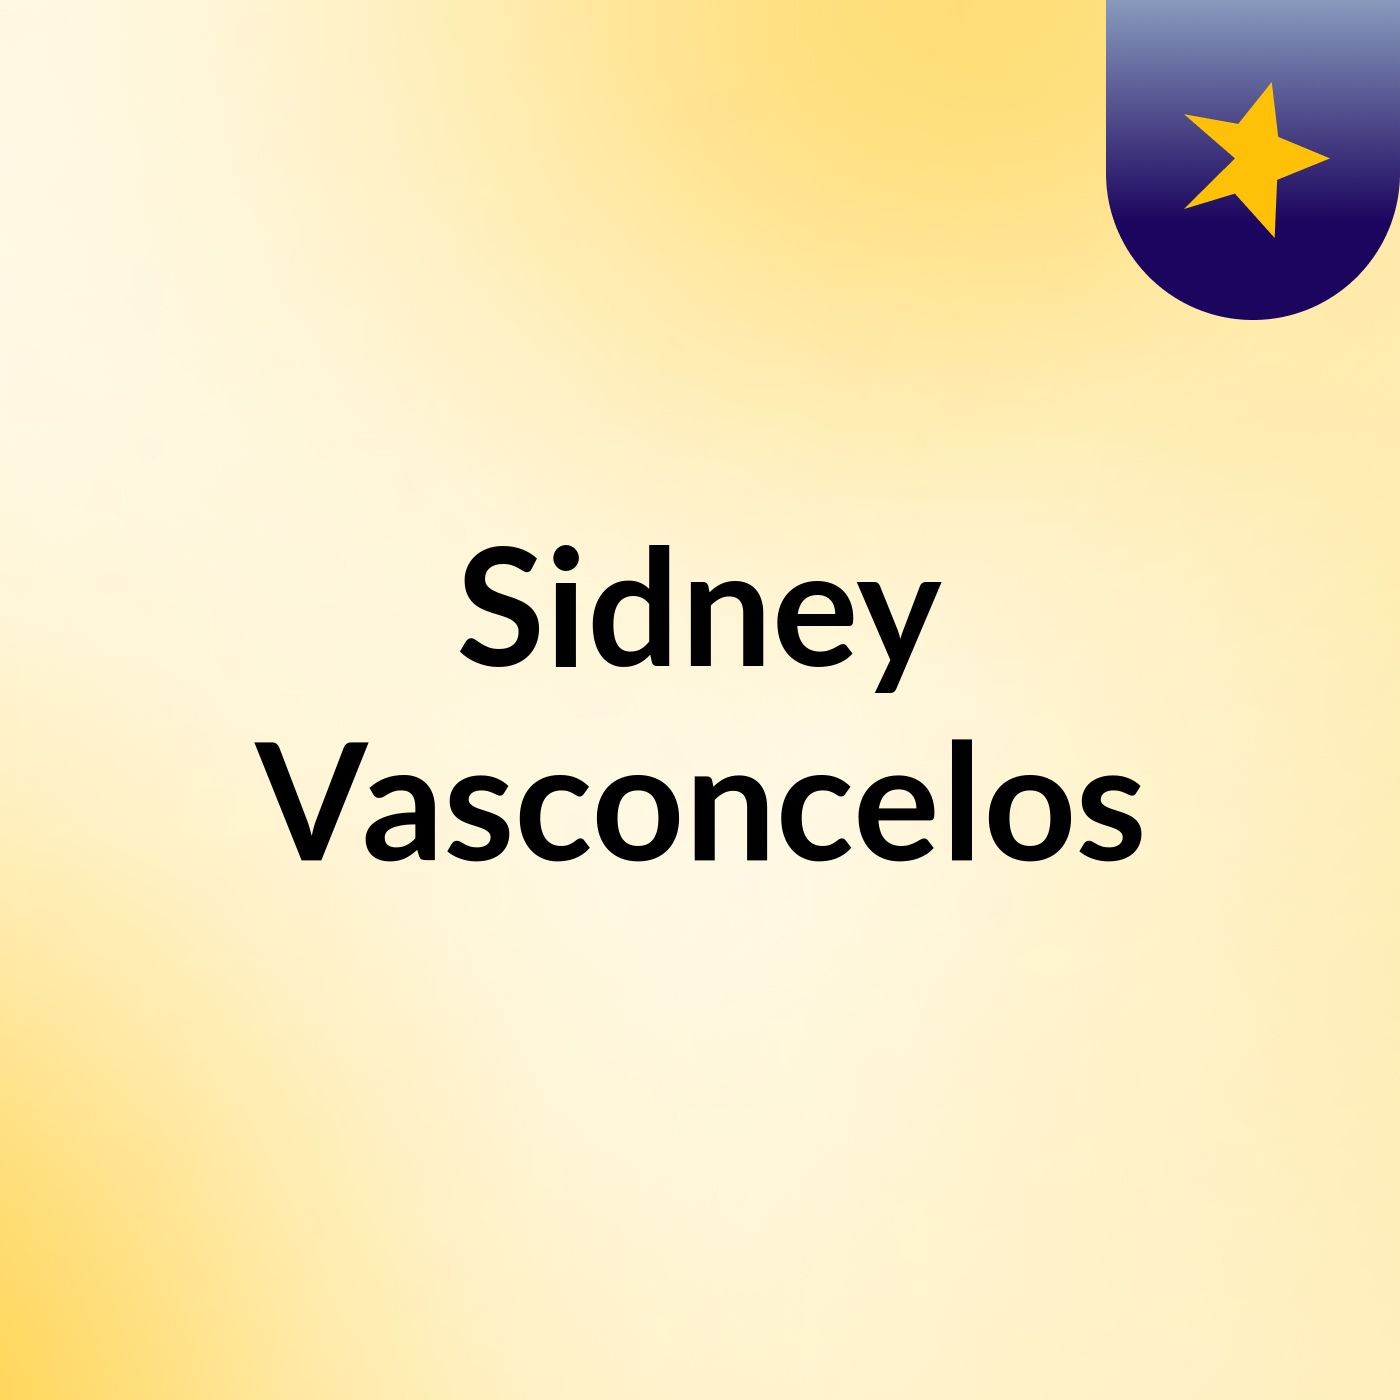 Sidney Vasconcelos